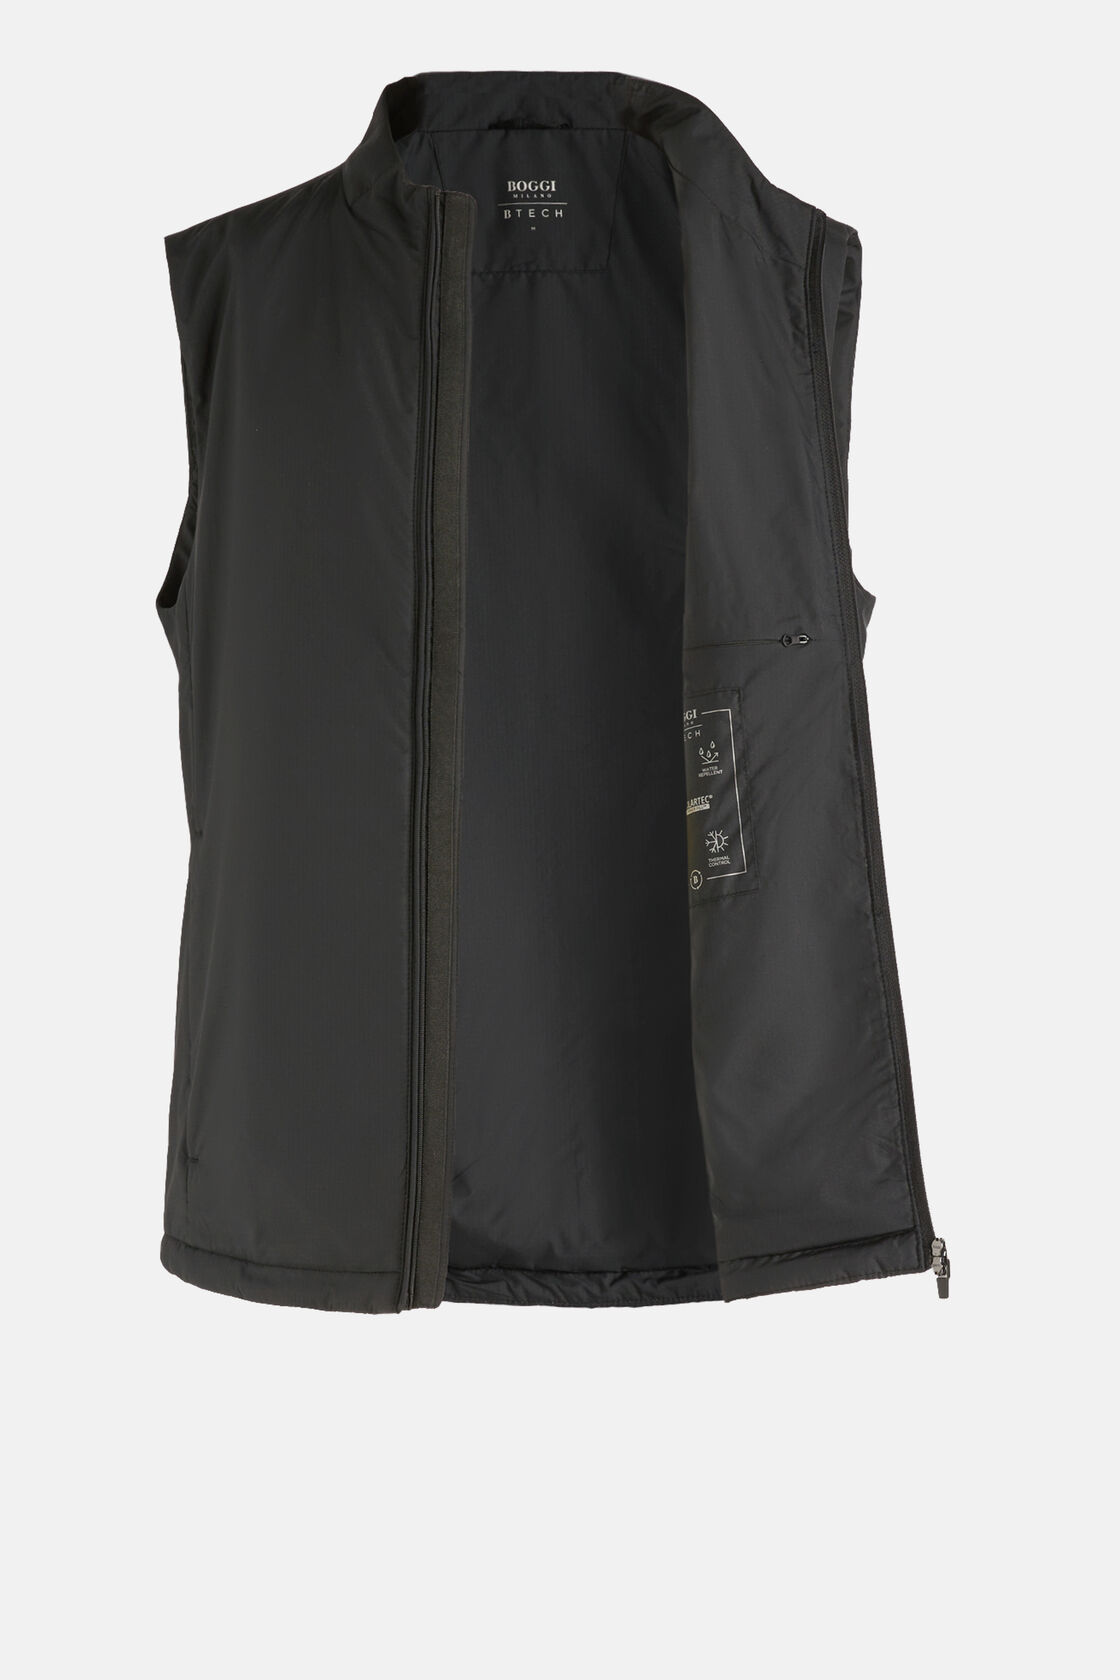 Alpha B Tech recycled fabric padded waistcoat, Black, hi-res